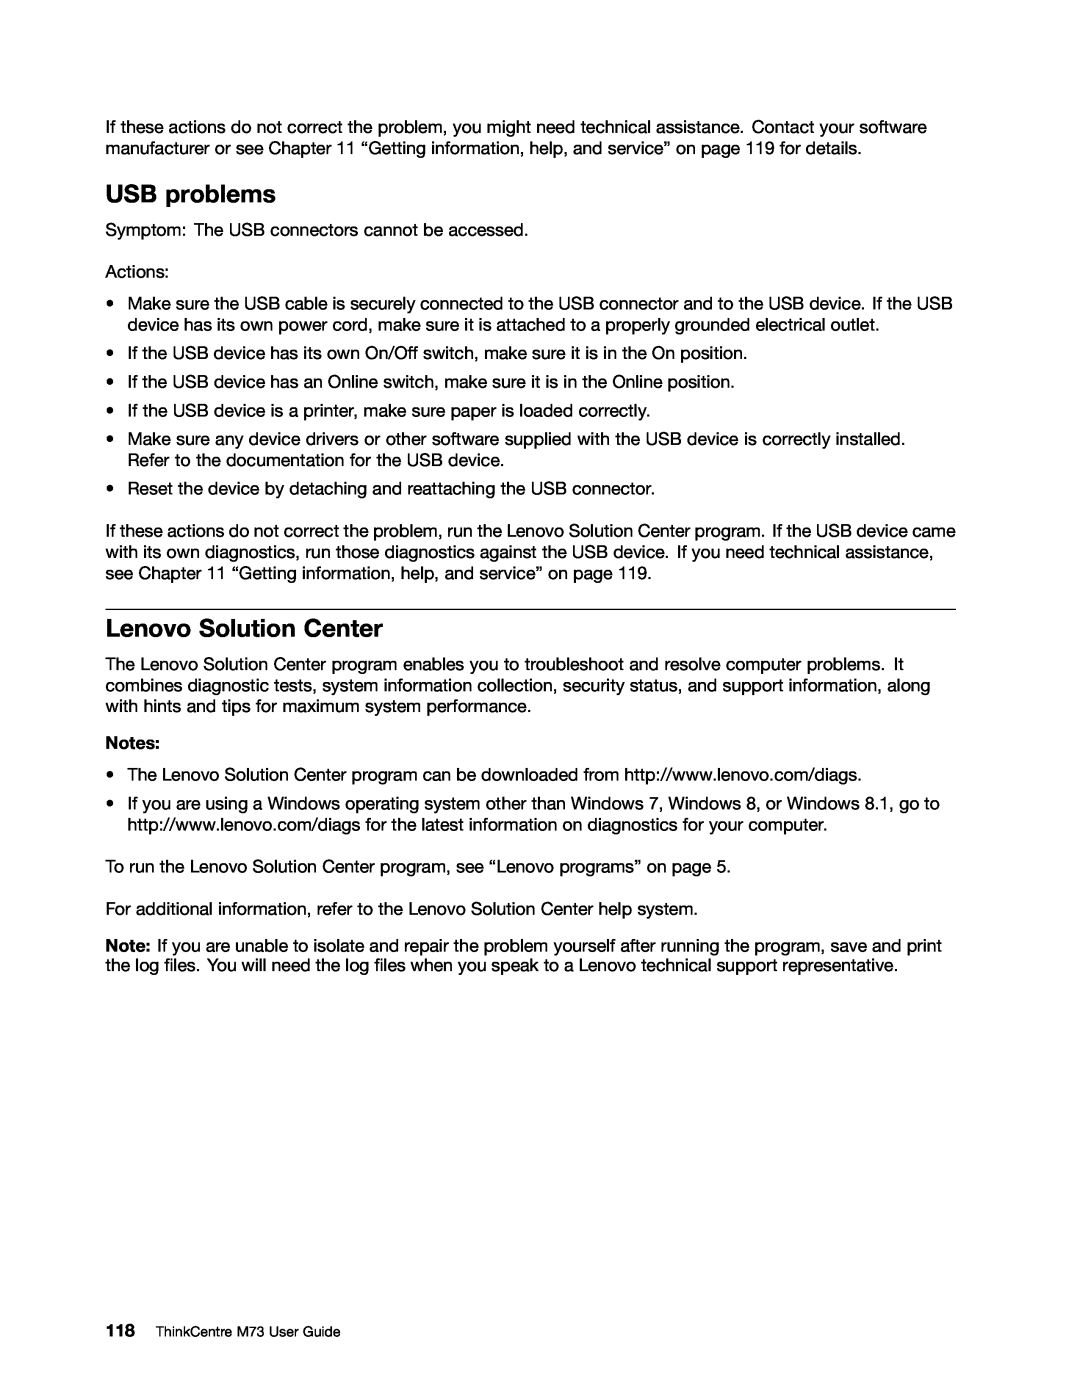 Lenovo manual USB problems, Lenovo Solution Center, ThinkCentre M73 User Guide 